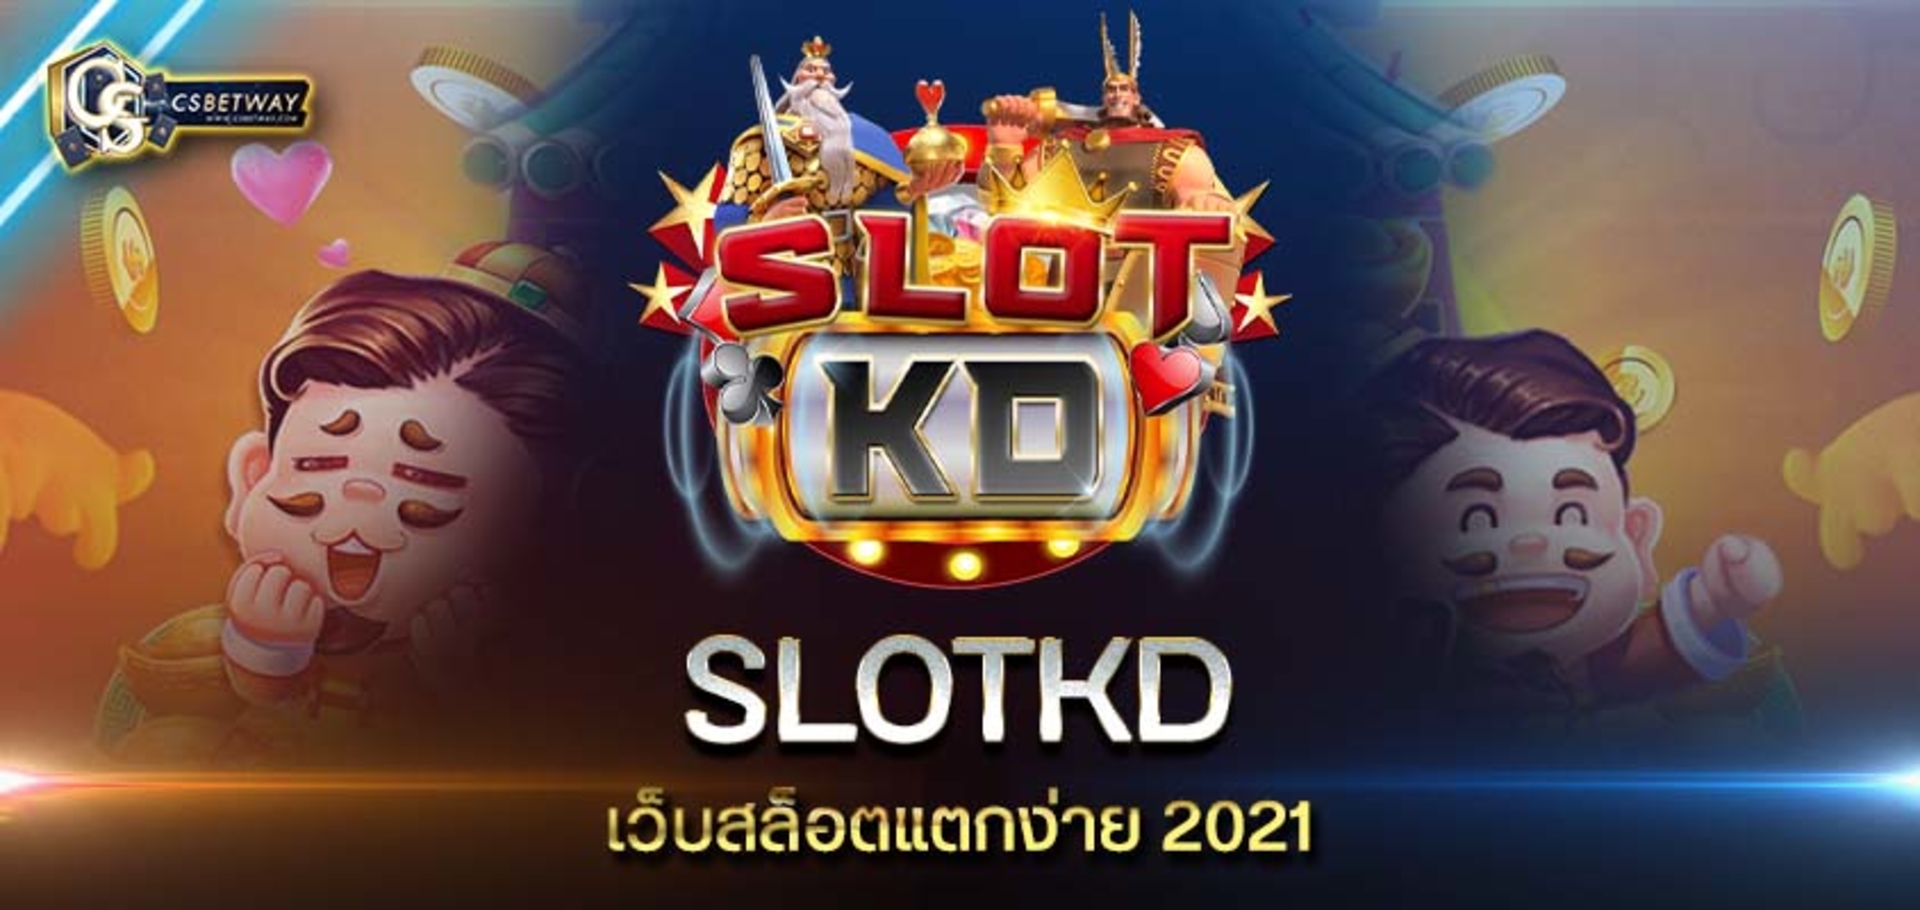 Slotkd เว็บสล็อตแตกง่าย 2021 Slotkd รวมสล็อตทุกค่าย ถอนเงินได้จริง